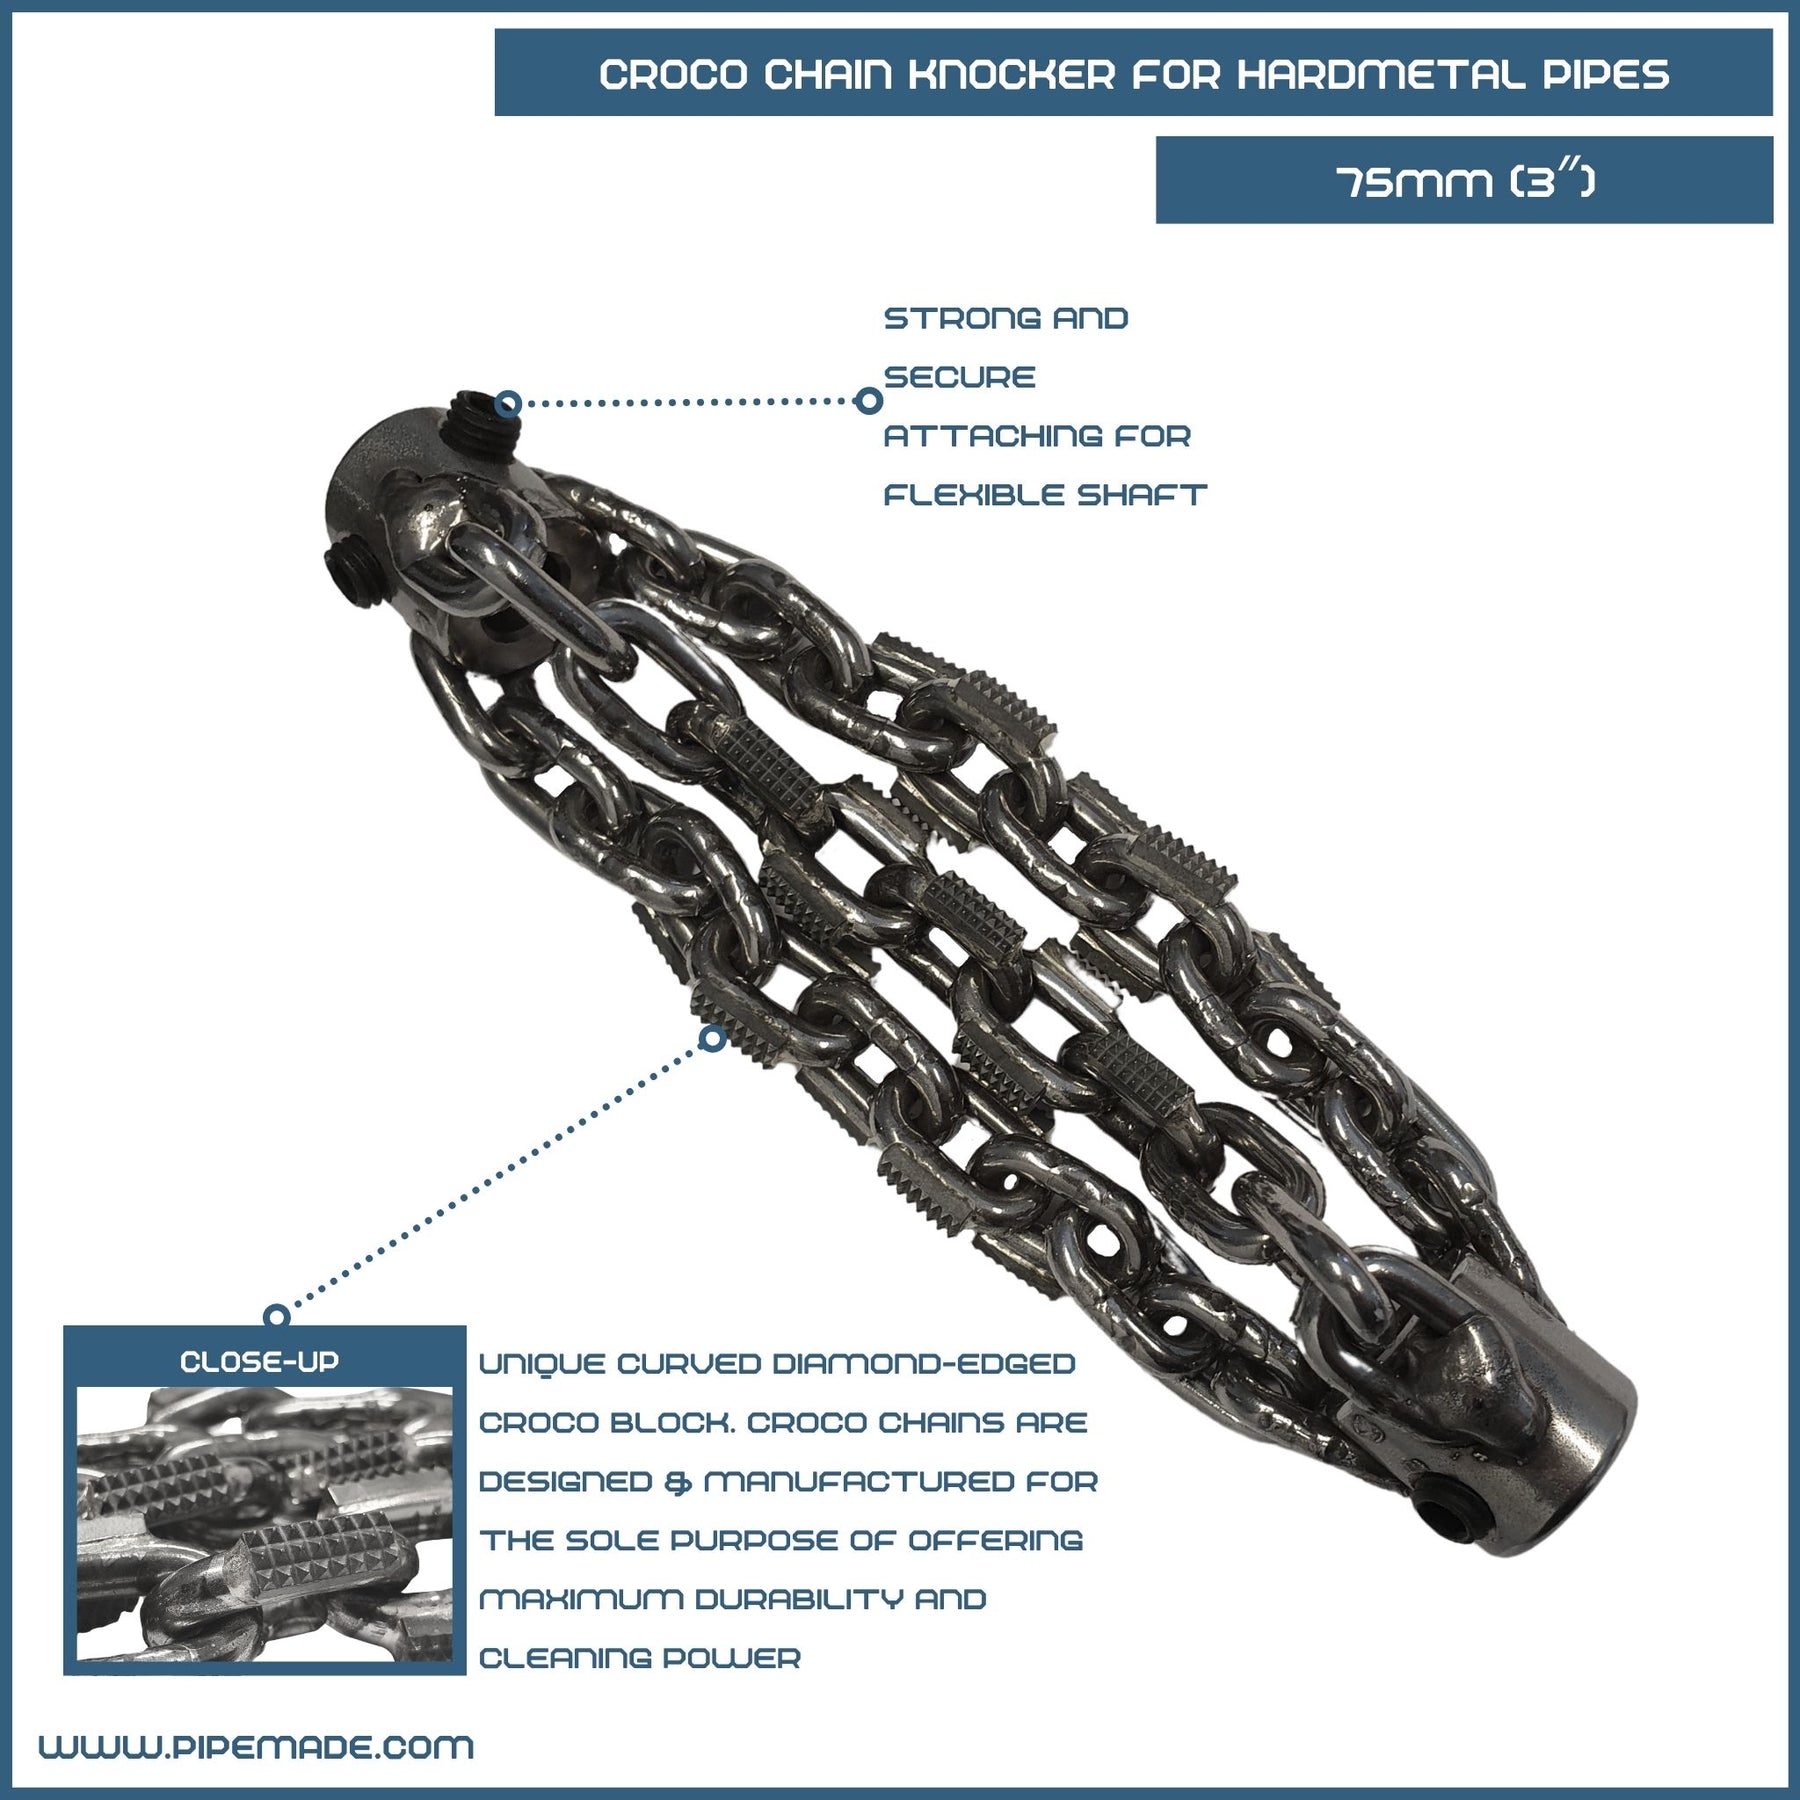 Croco Chain Knocker for Hardmetal Pipes